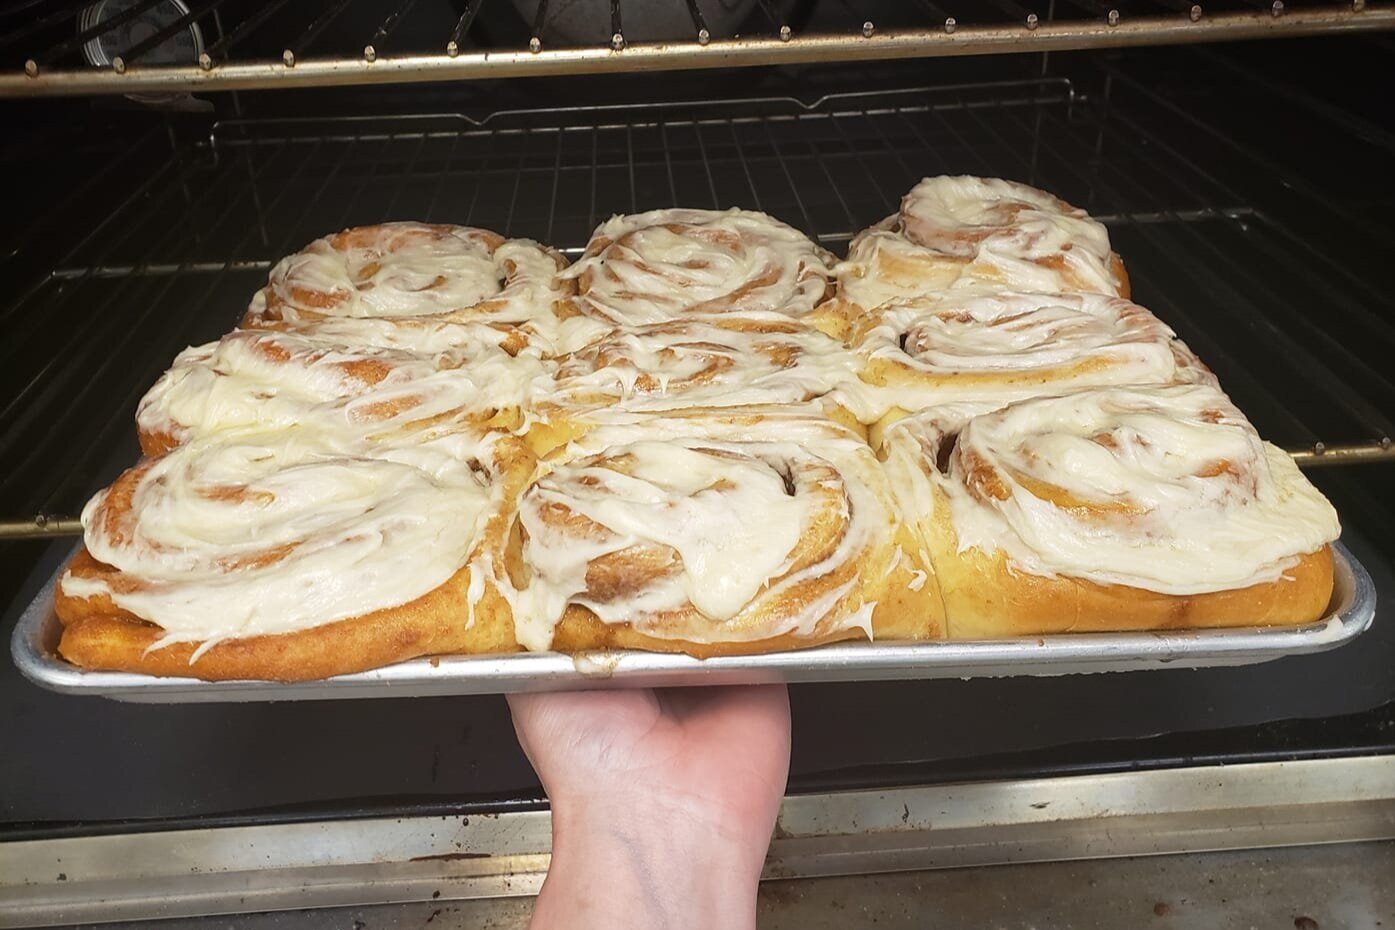 bakery+-+rolls+in+oven.jpg